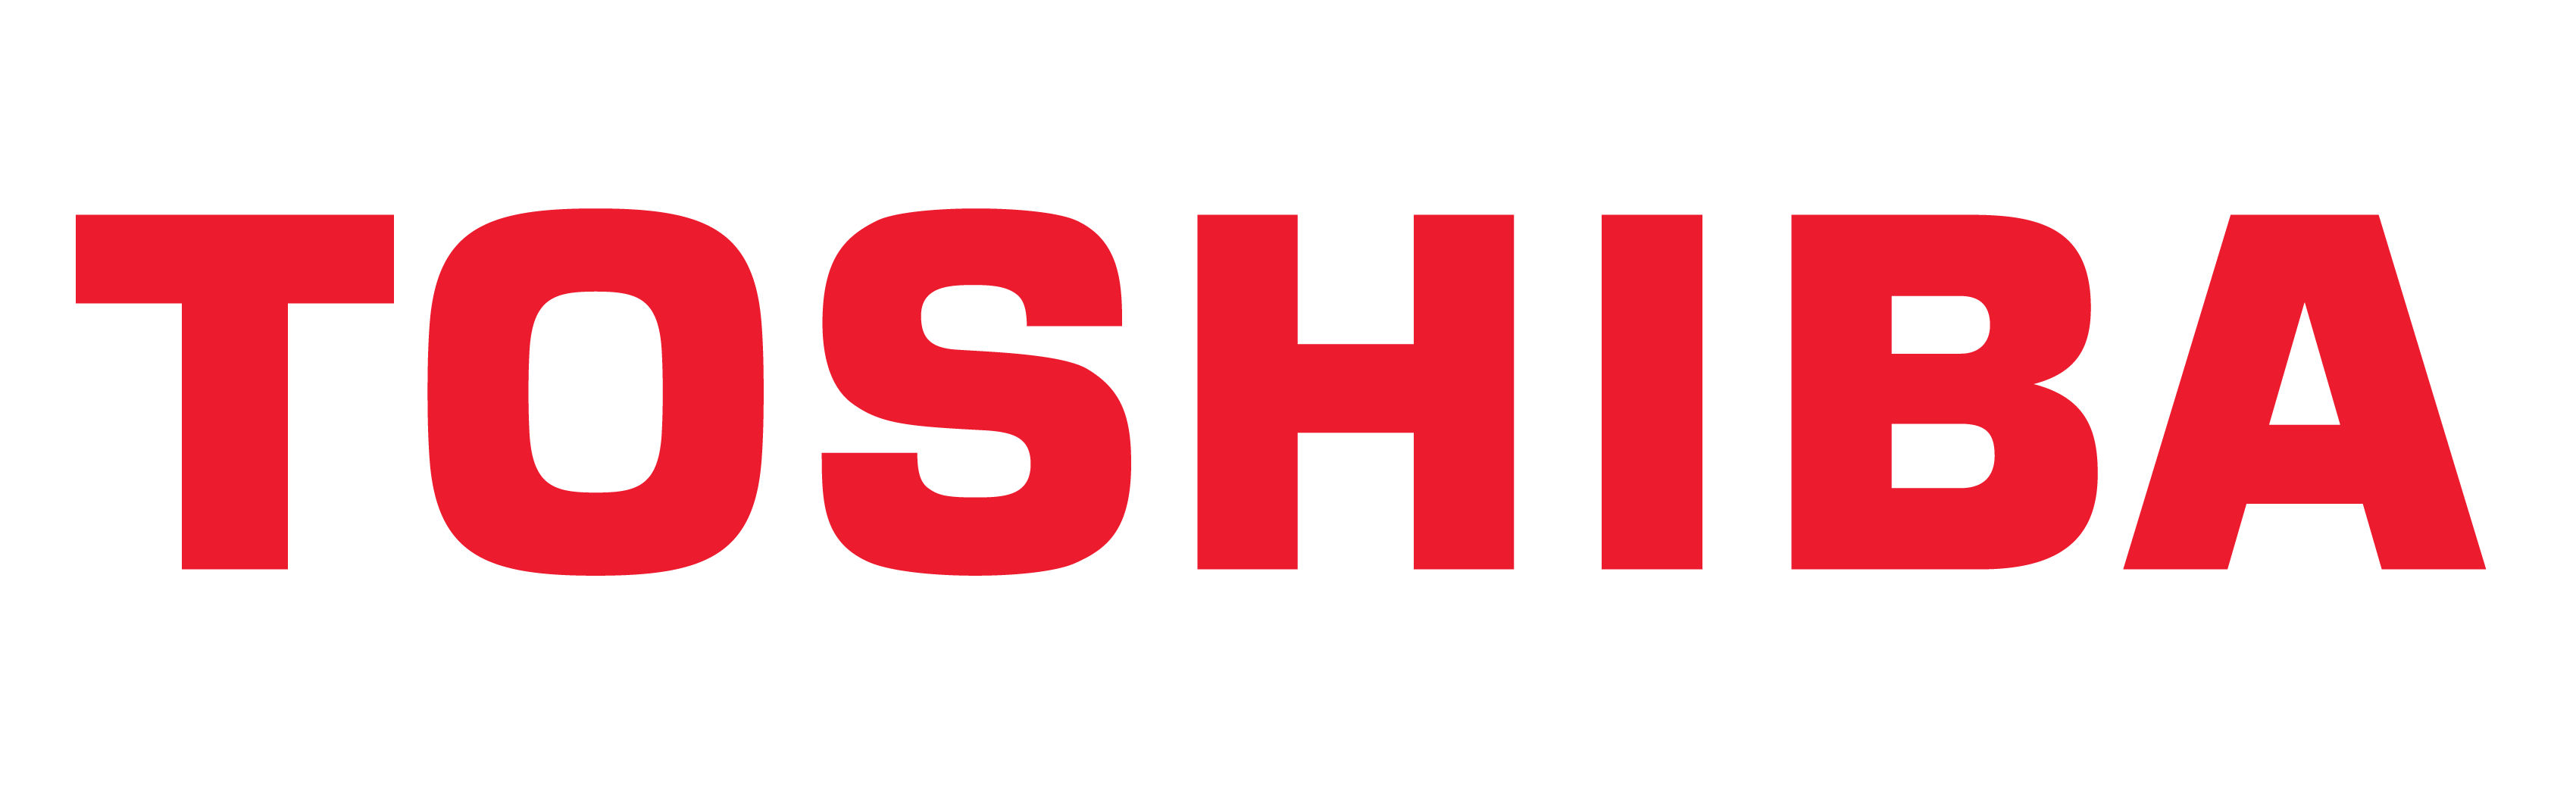 Toshiban logo, Toshiban symboli, merkitys, historia ja evoluutio